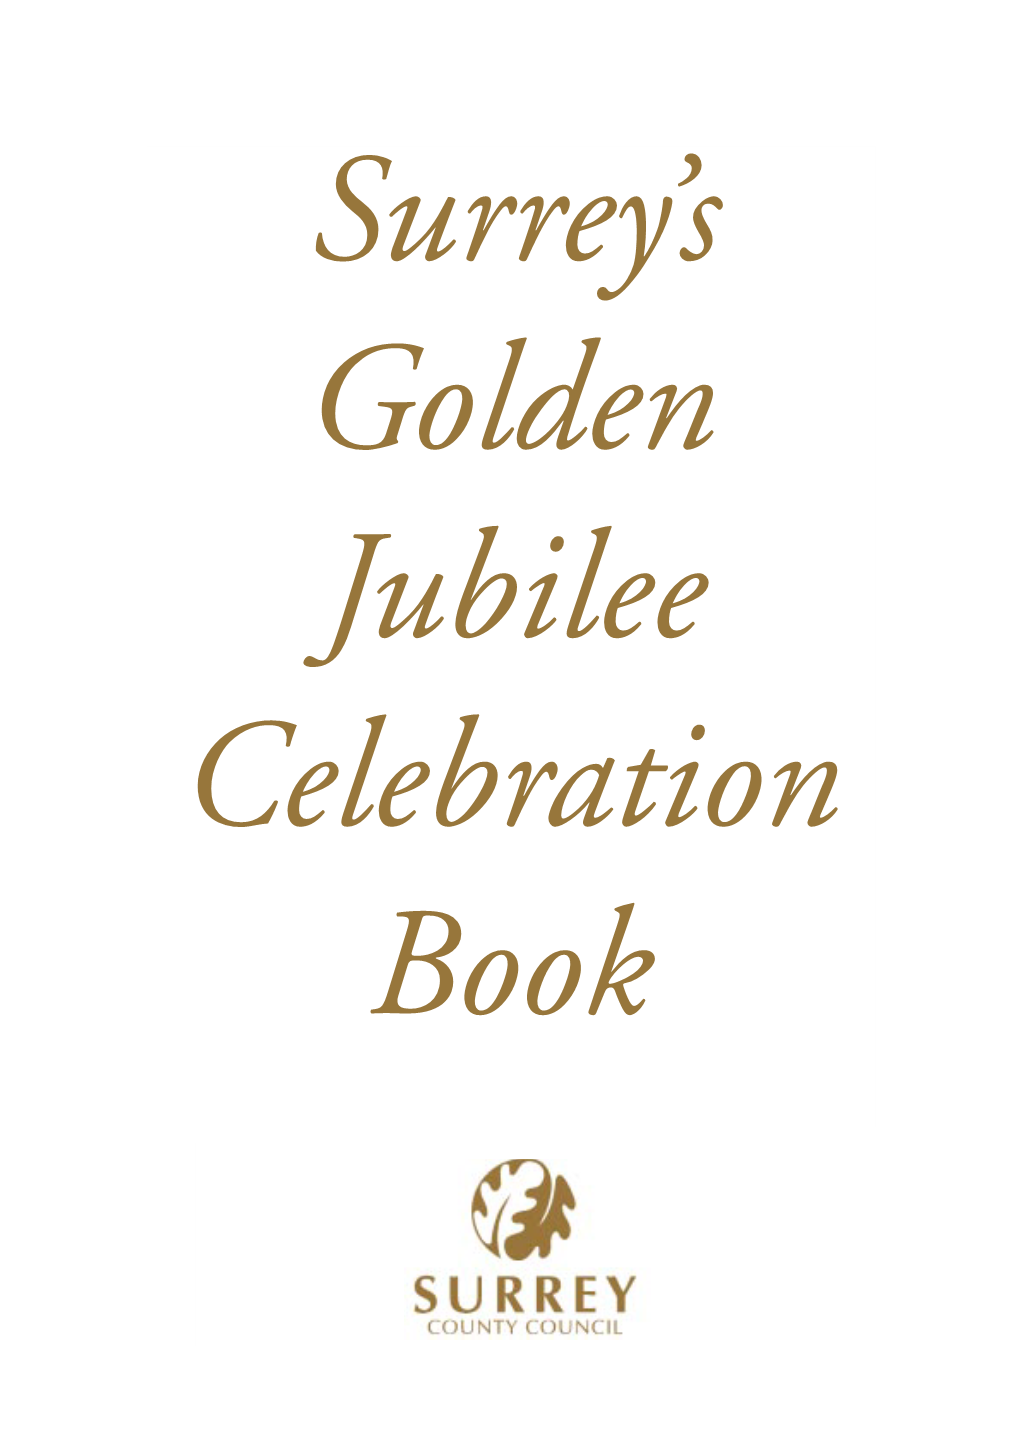 Surrey's Golden Jubilee Celebration Book